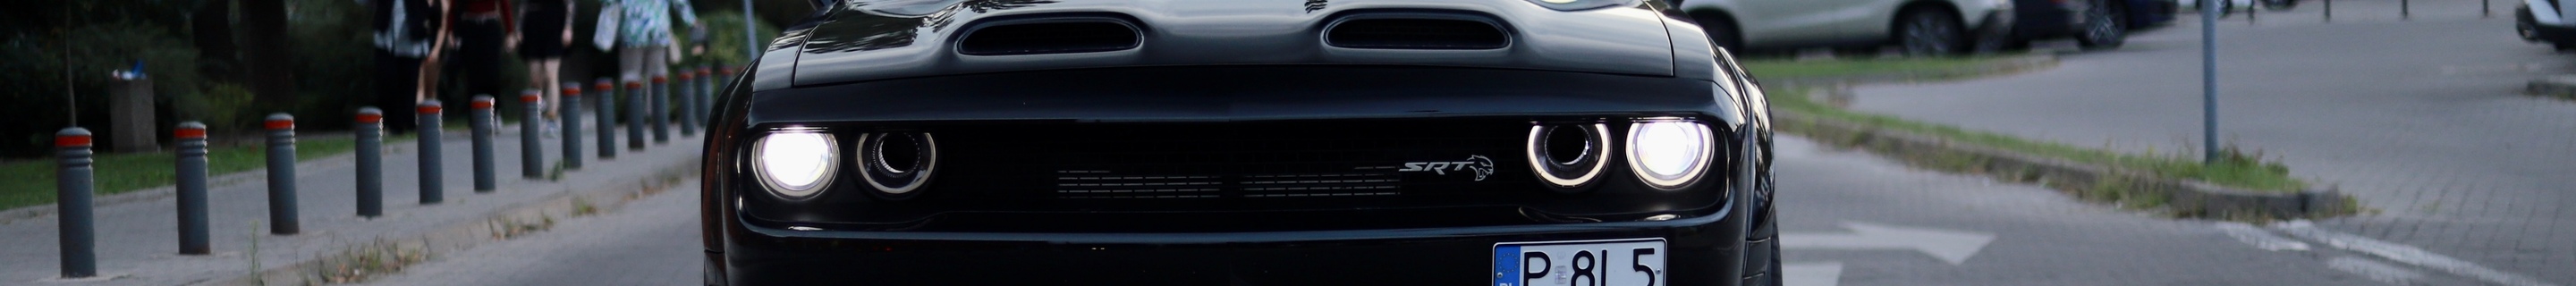 Dodge Challenger SRT Hellcat Redeye Widebody